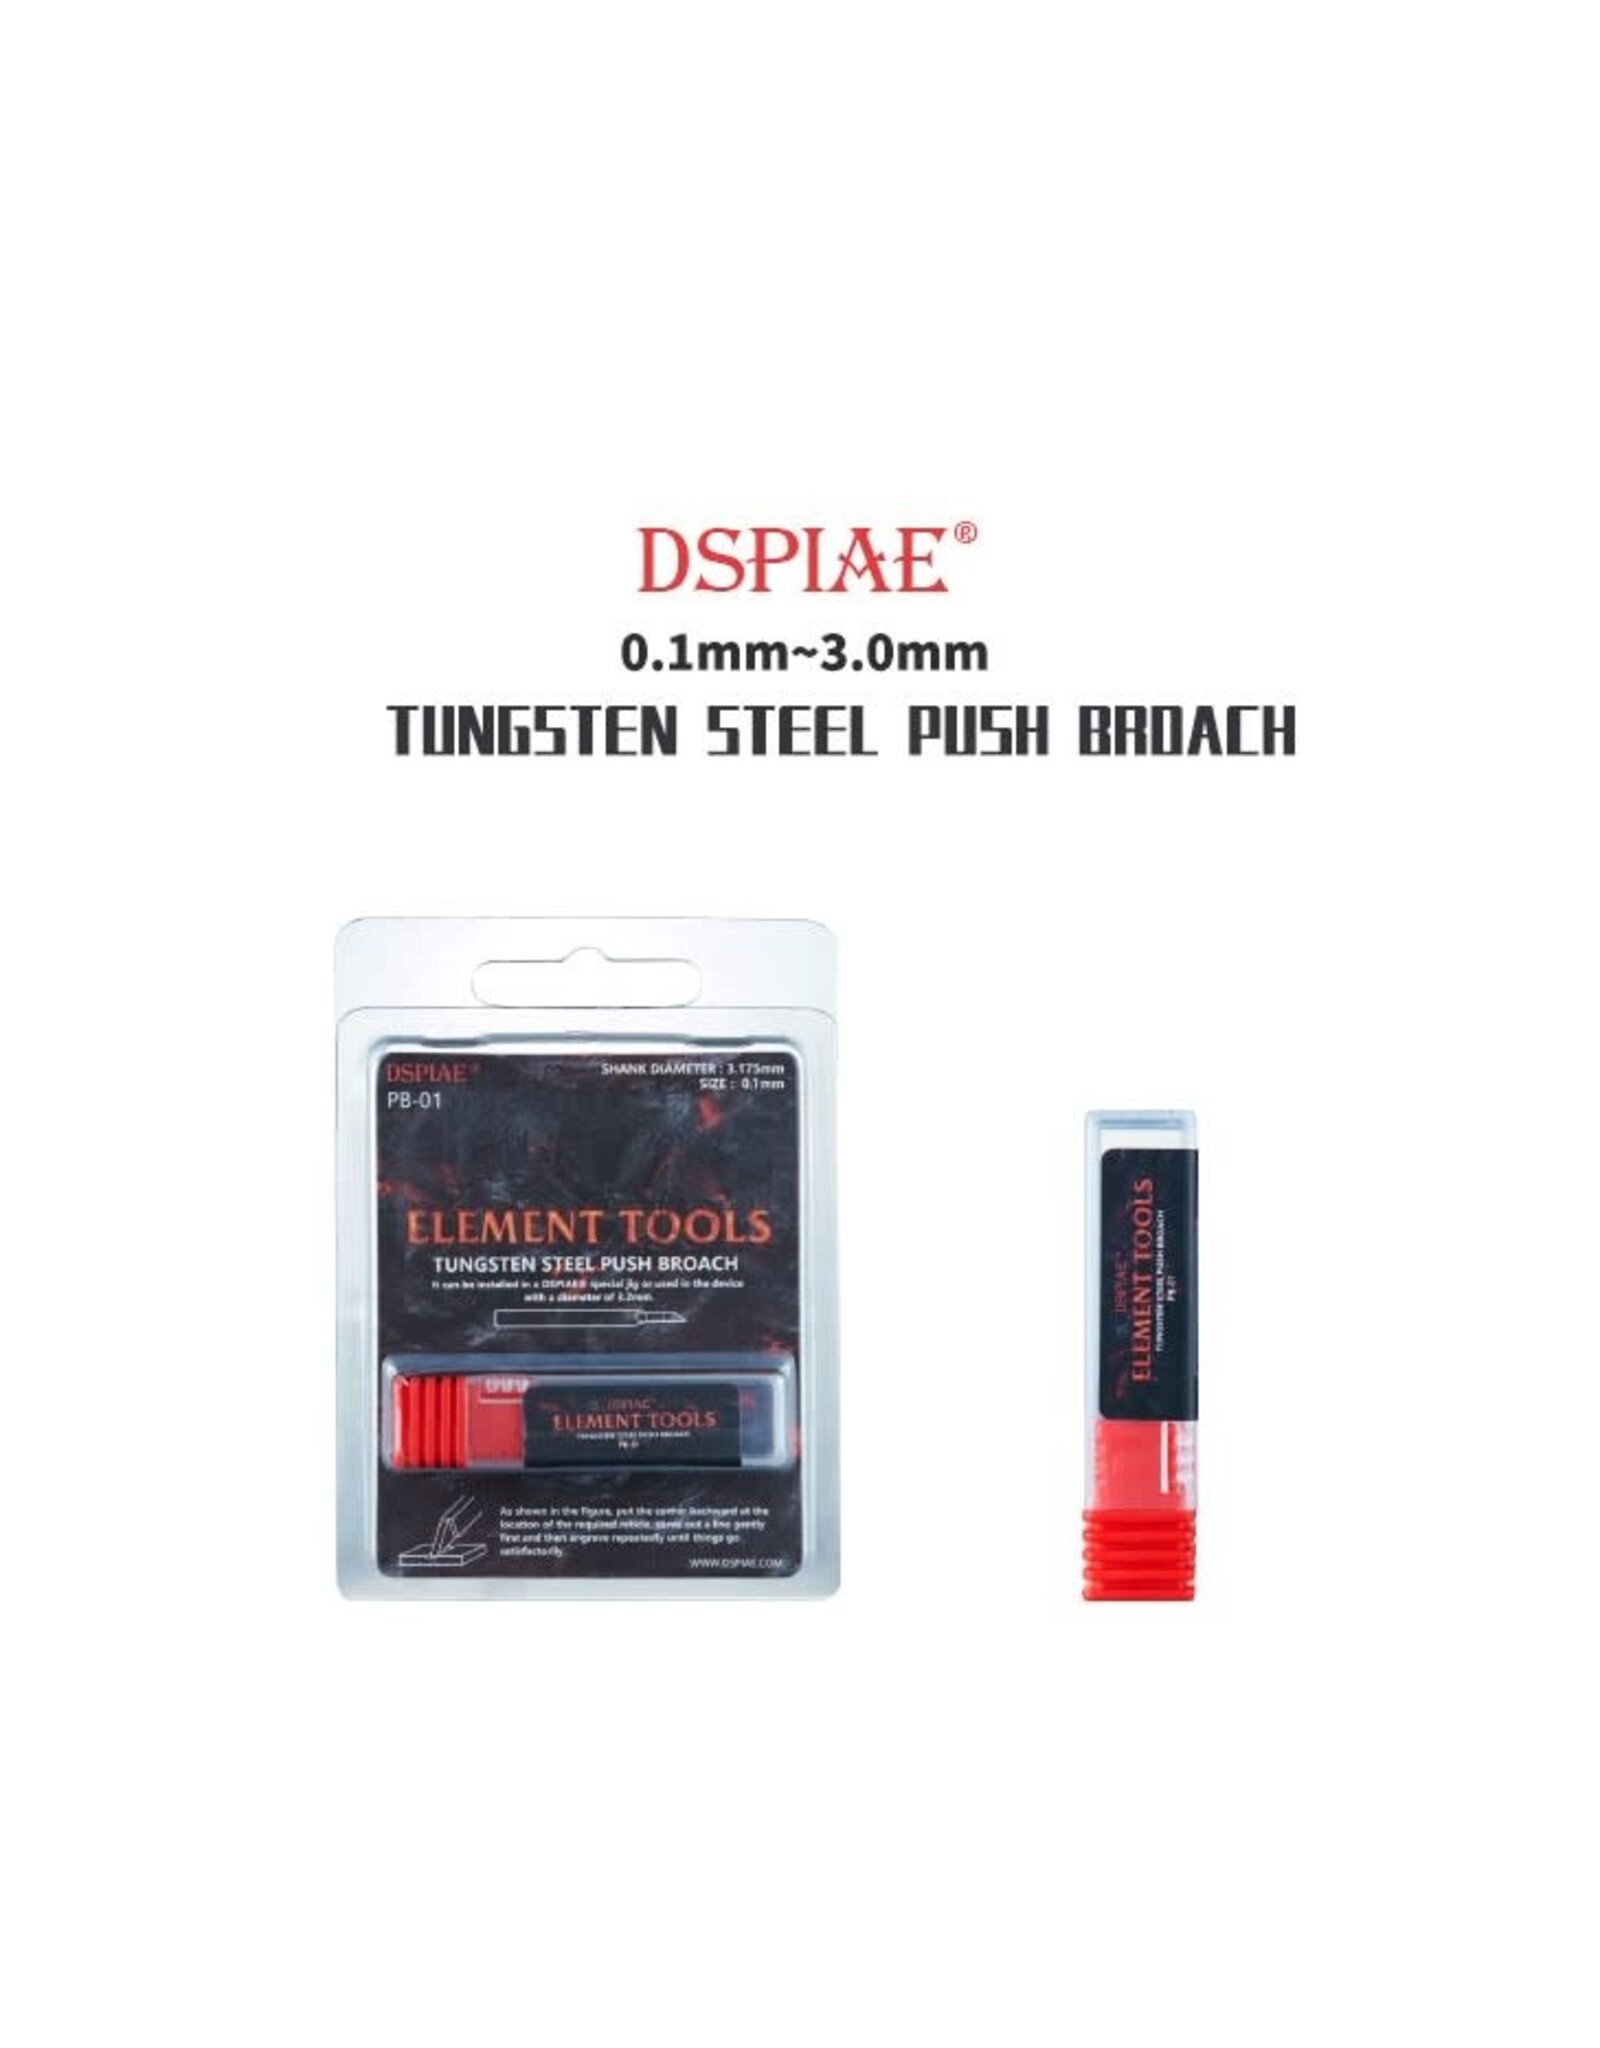 DSPIAE 0.3MM Tungsten Steel Push Broach Chisel